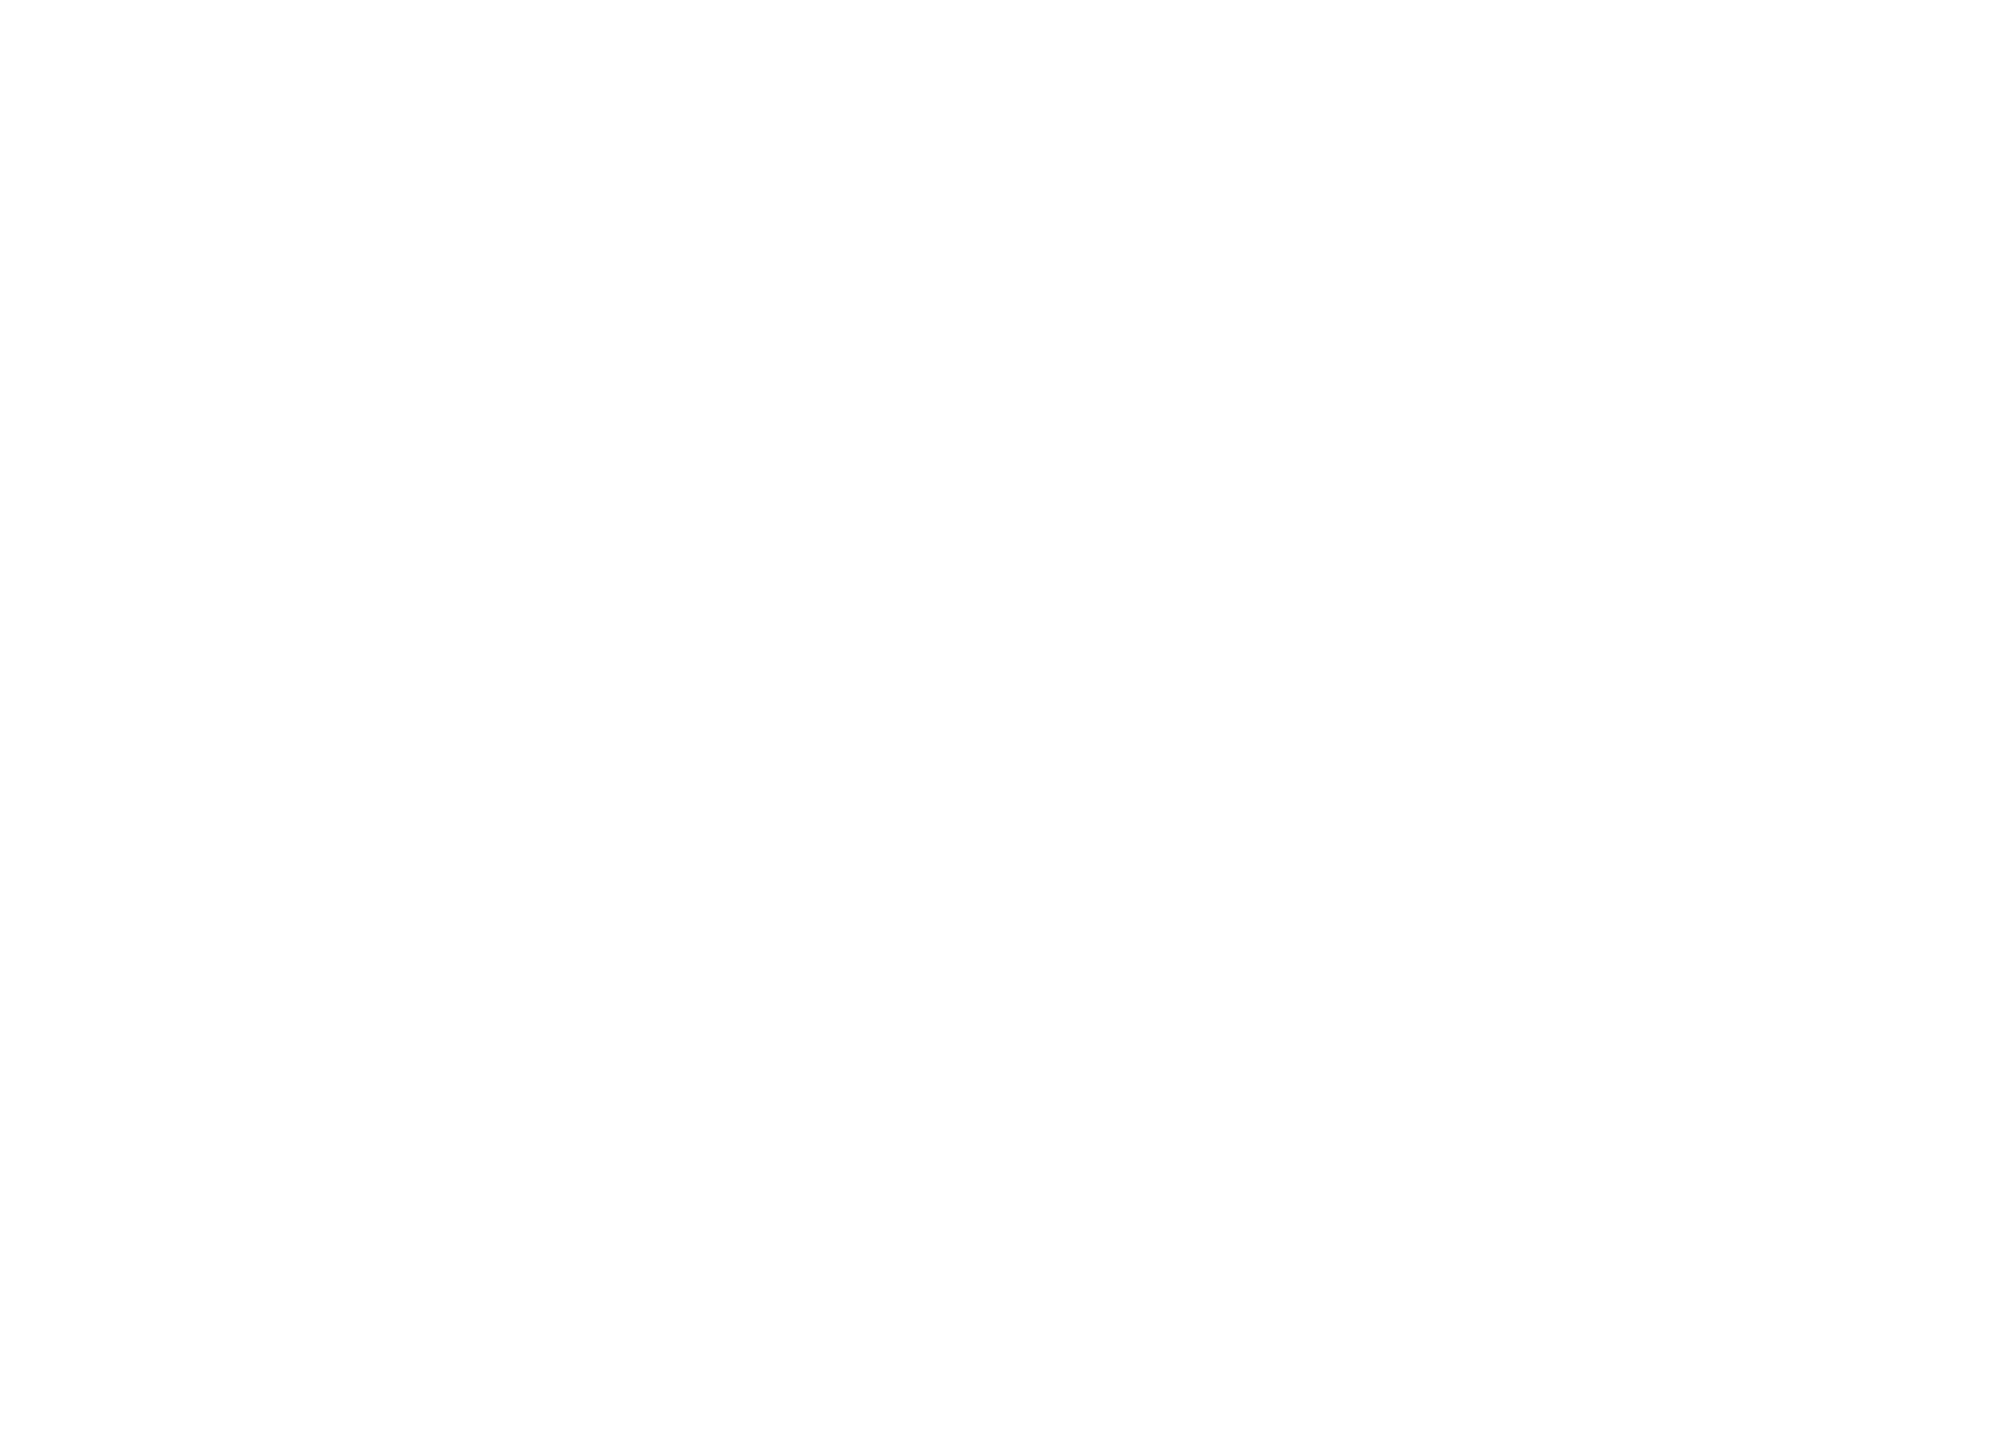 Bar Cart logo